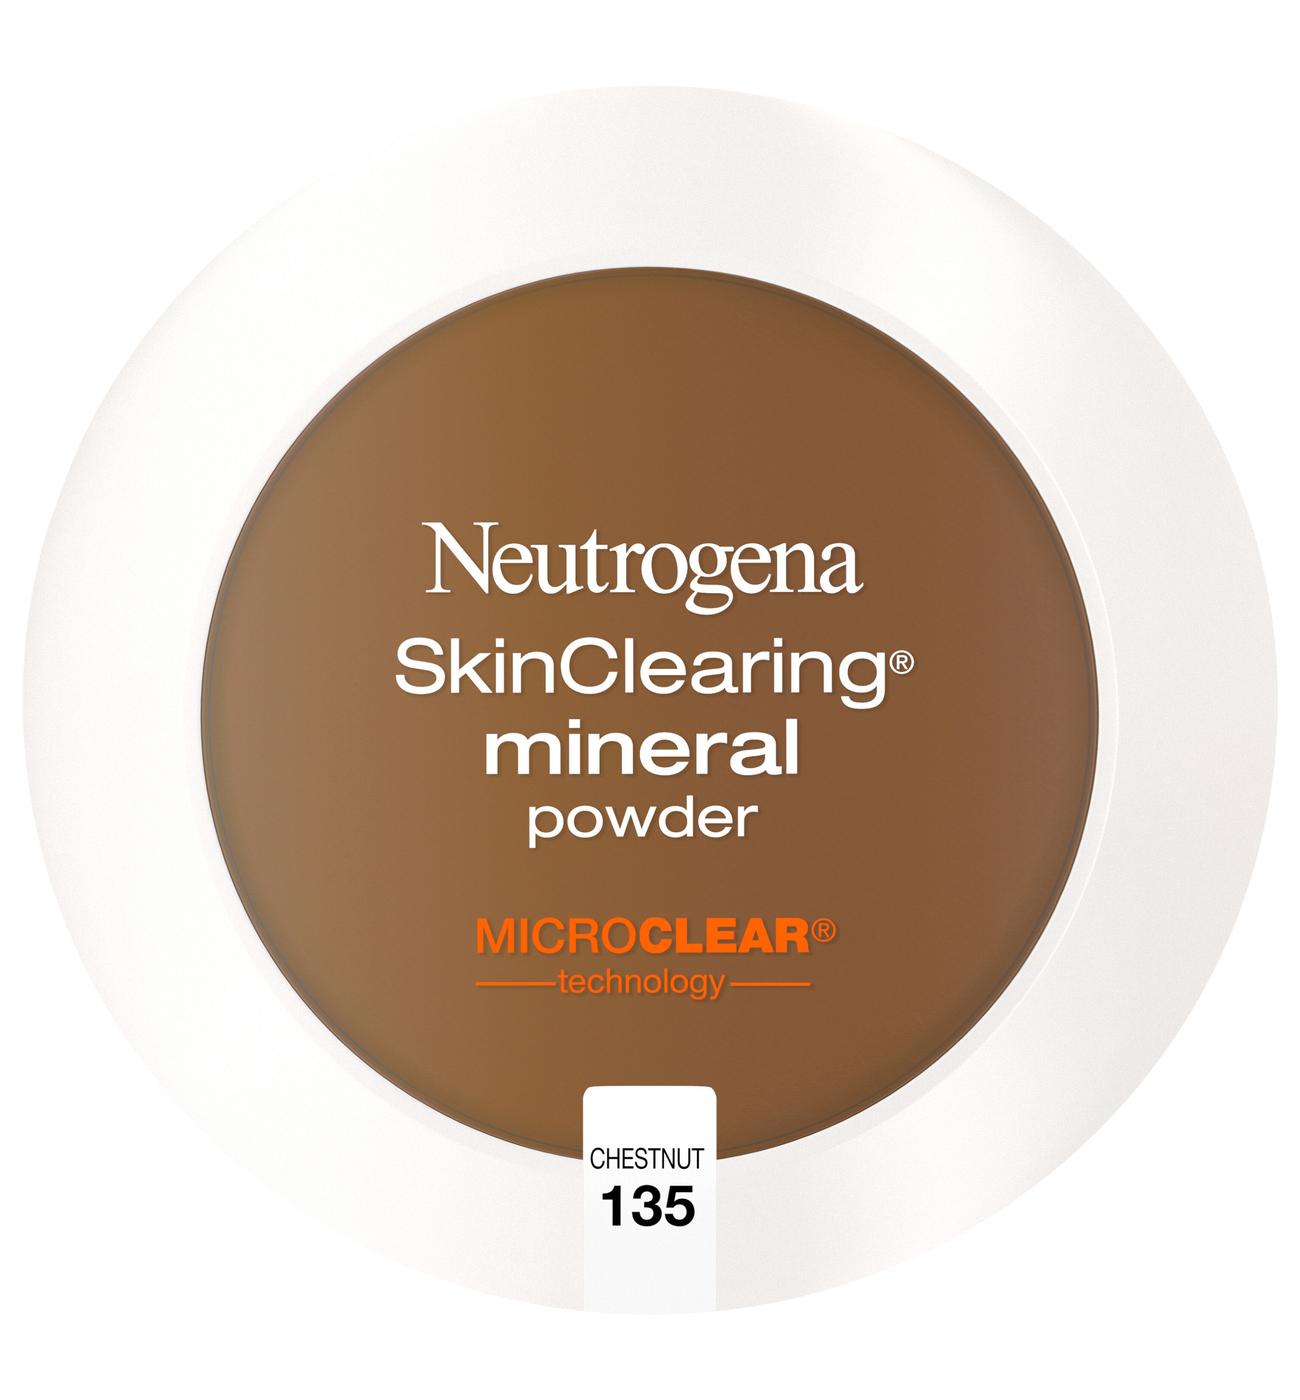 Neutrogena Skinclearing Mineral Powder 135 Chestnut; image 1 of 4